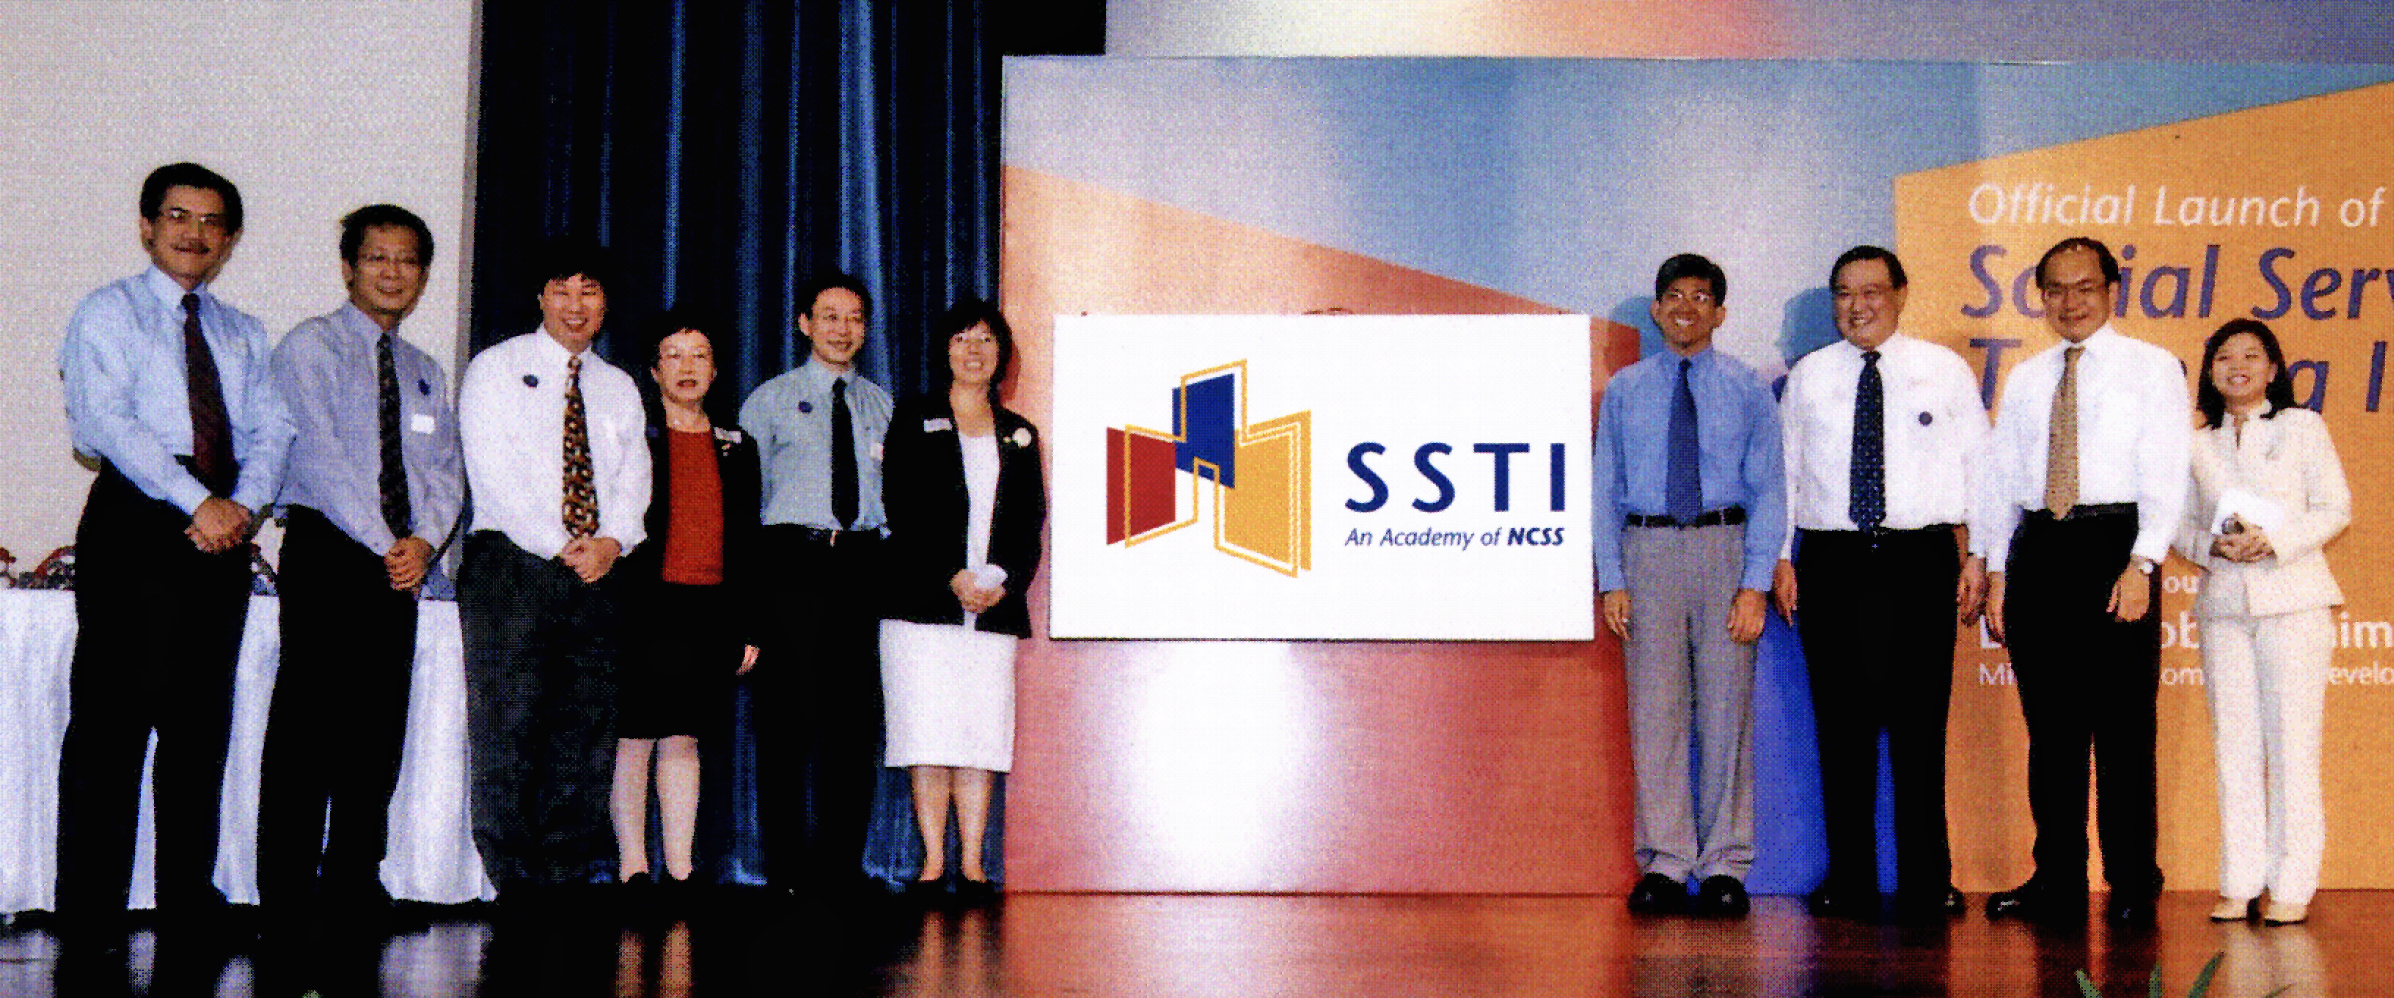 2003_SSTI_Launch